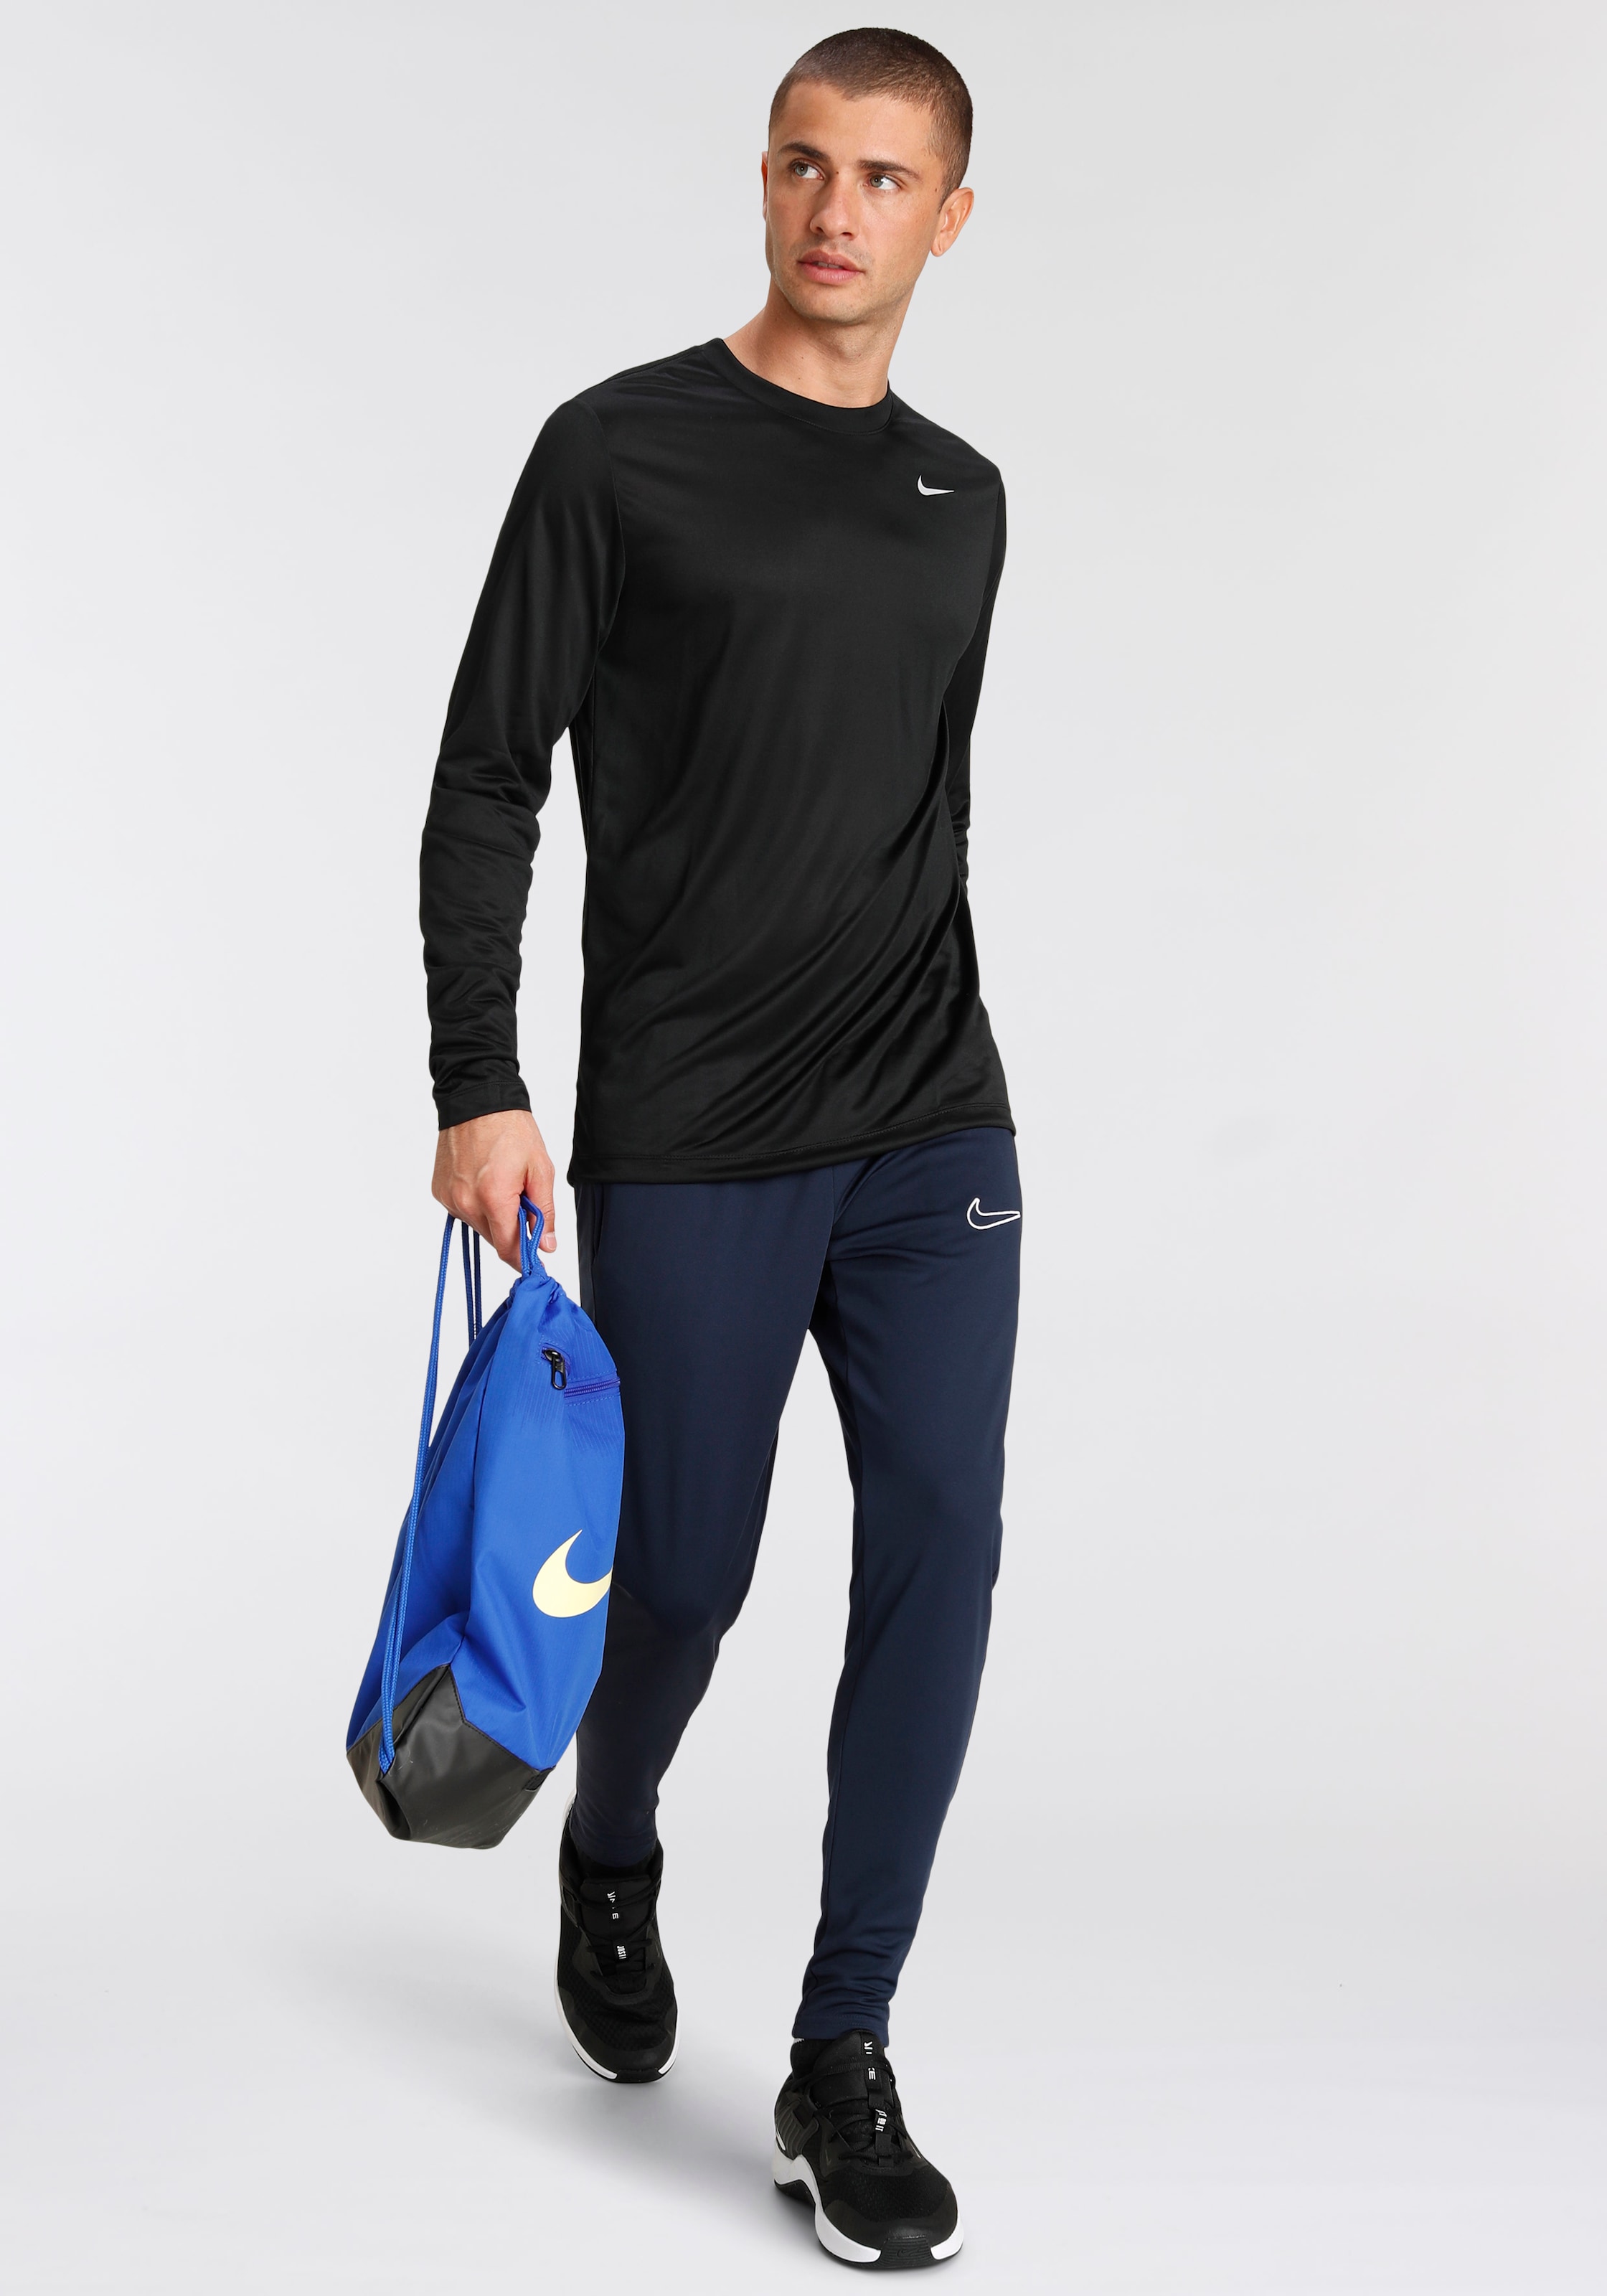 Nike Trainingsshirt »DRI-FIT LEGEND MEN'S LONG-SLEEVE FITNESS TOP«